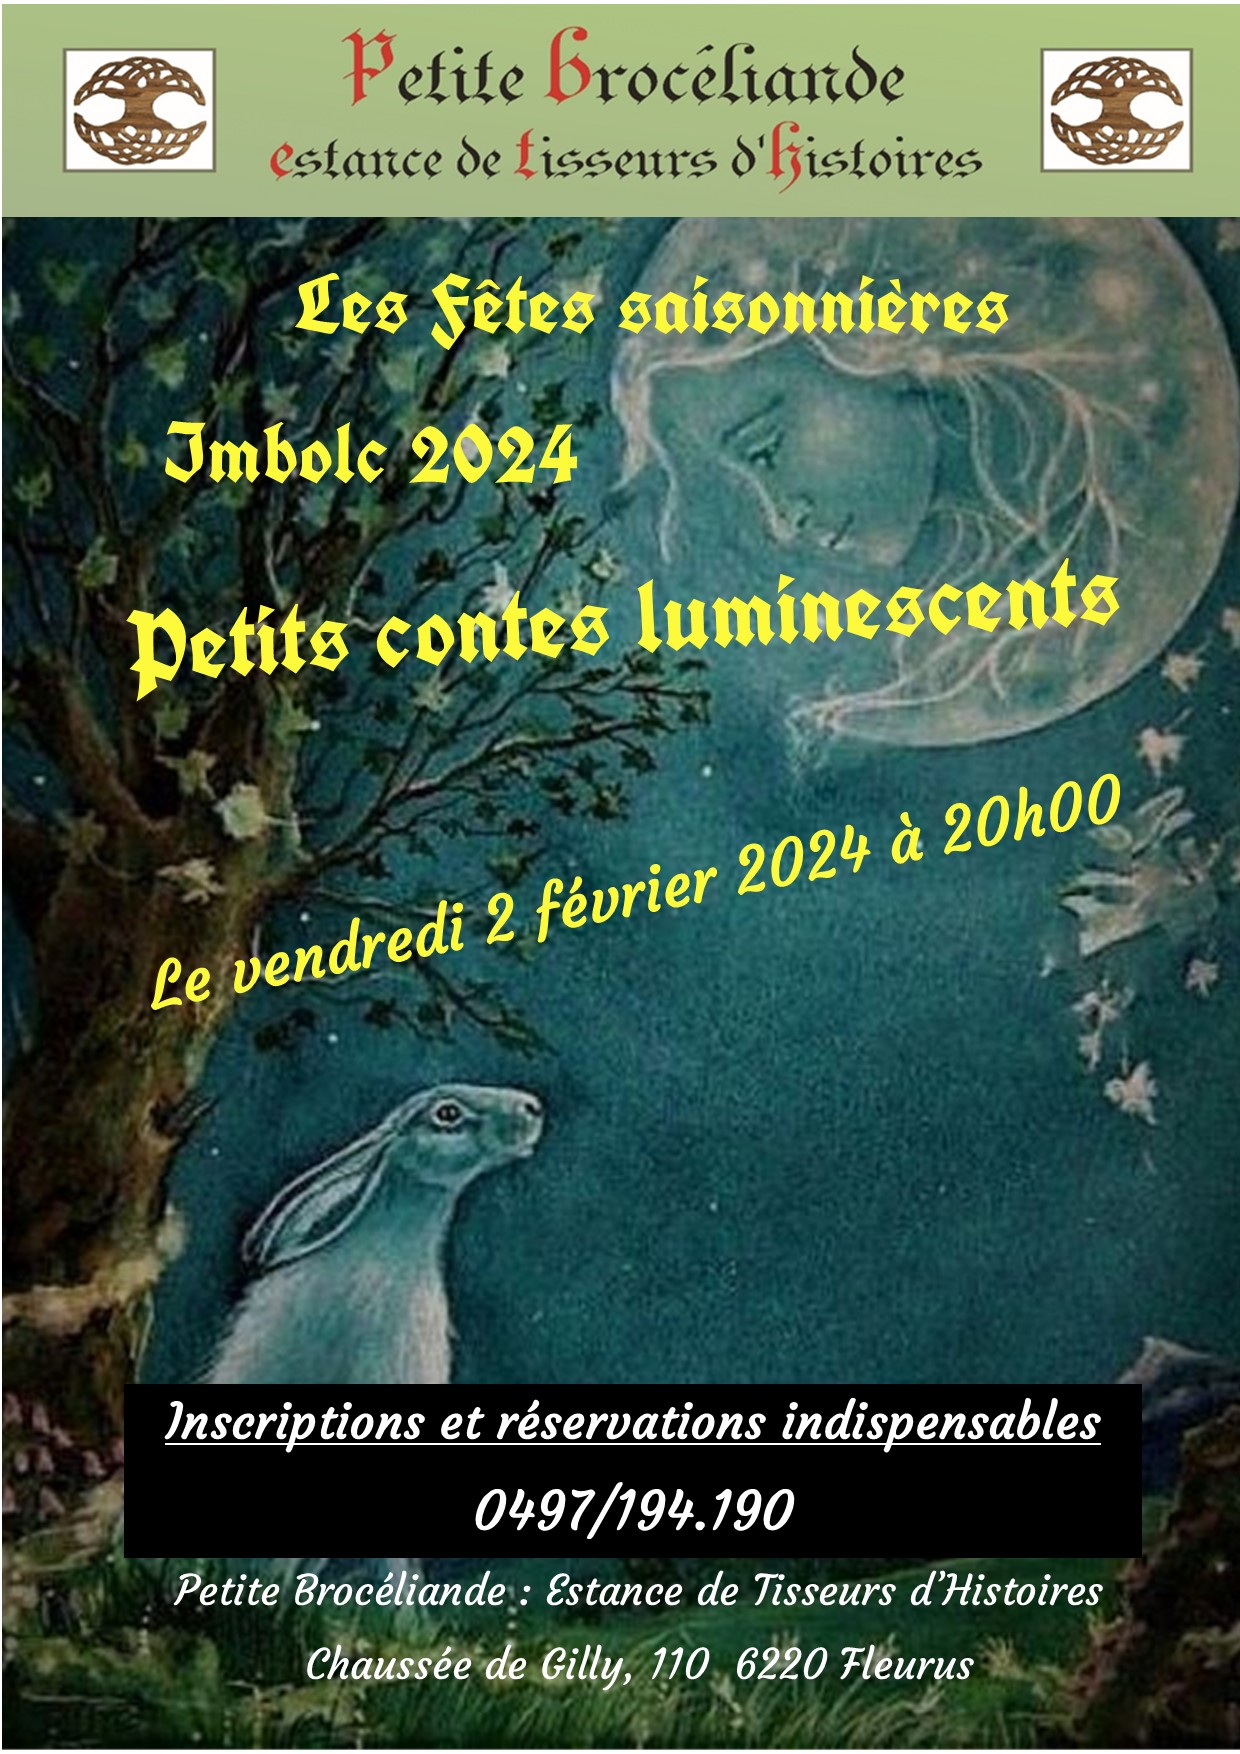 Contes-luminescents-Imbolc-2024